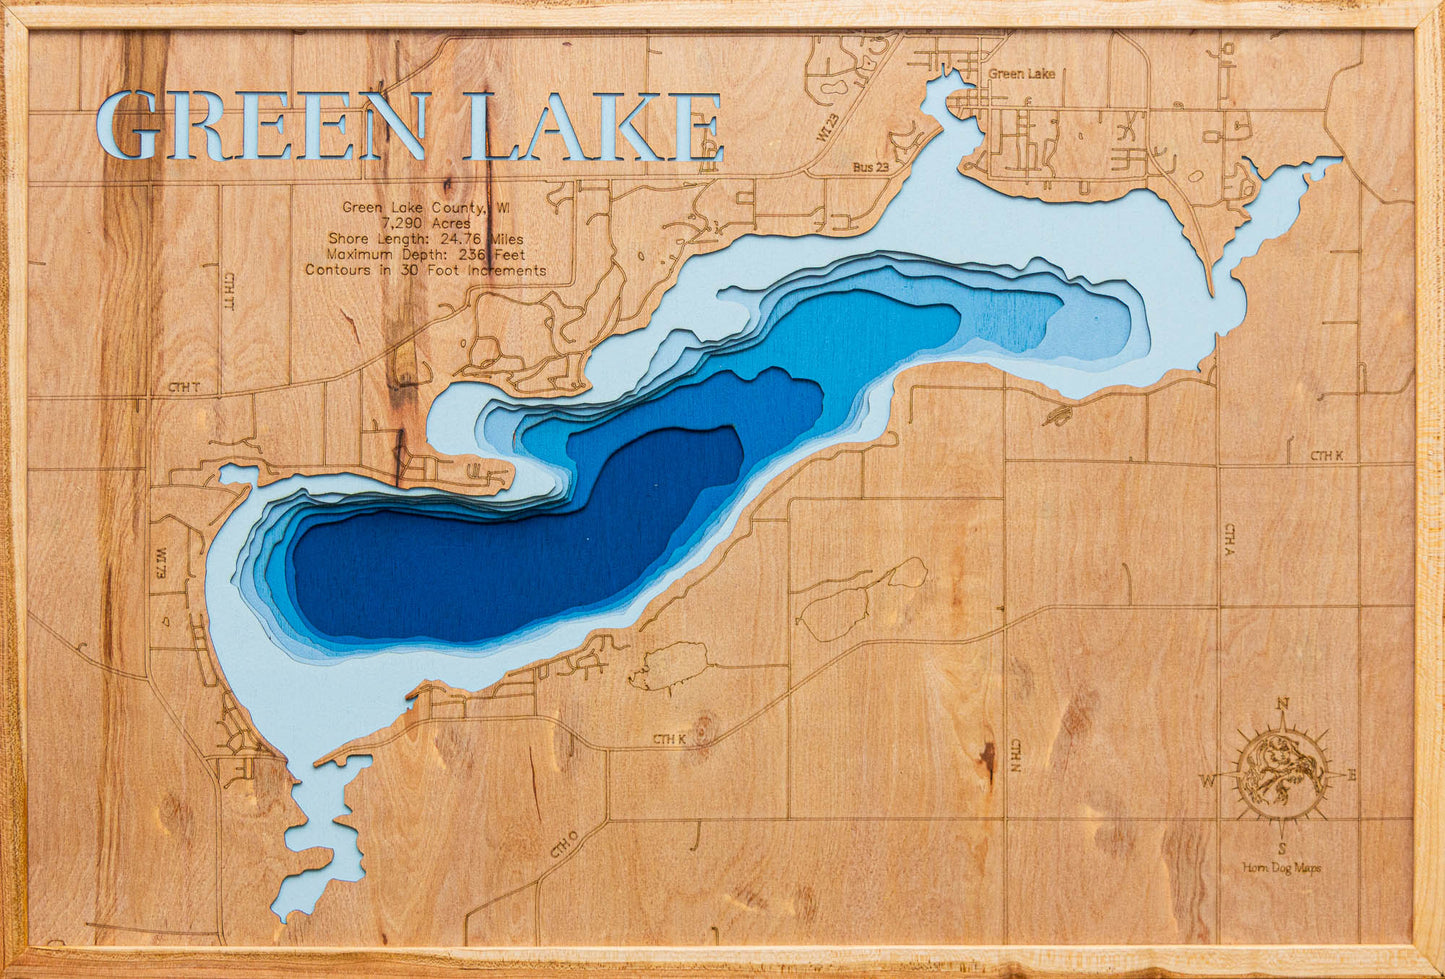 Green Lake in Green Lake County, WI